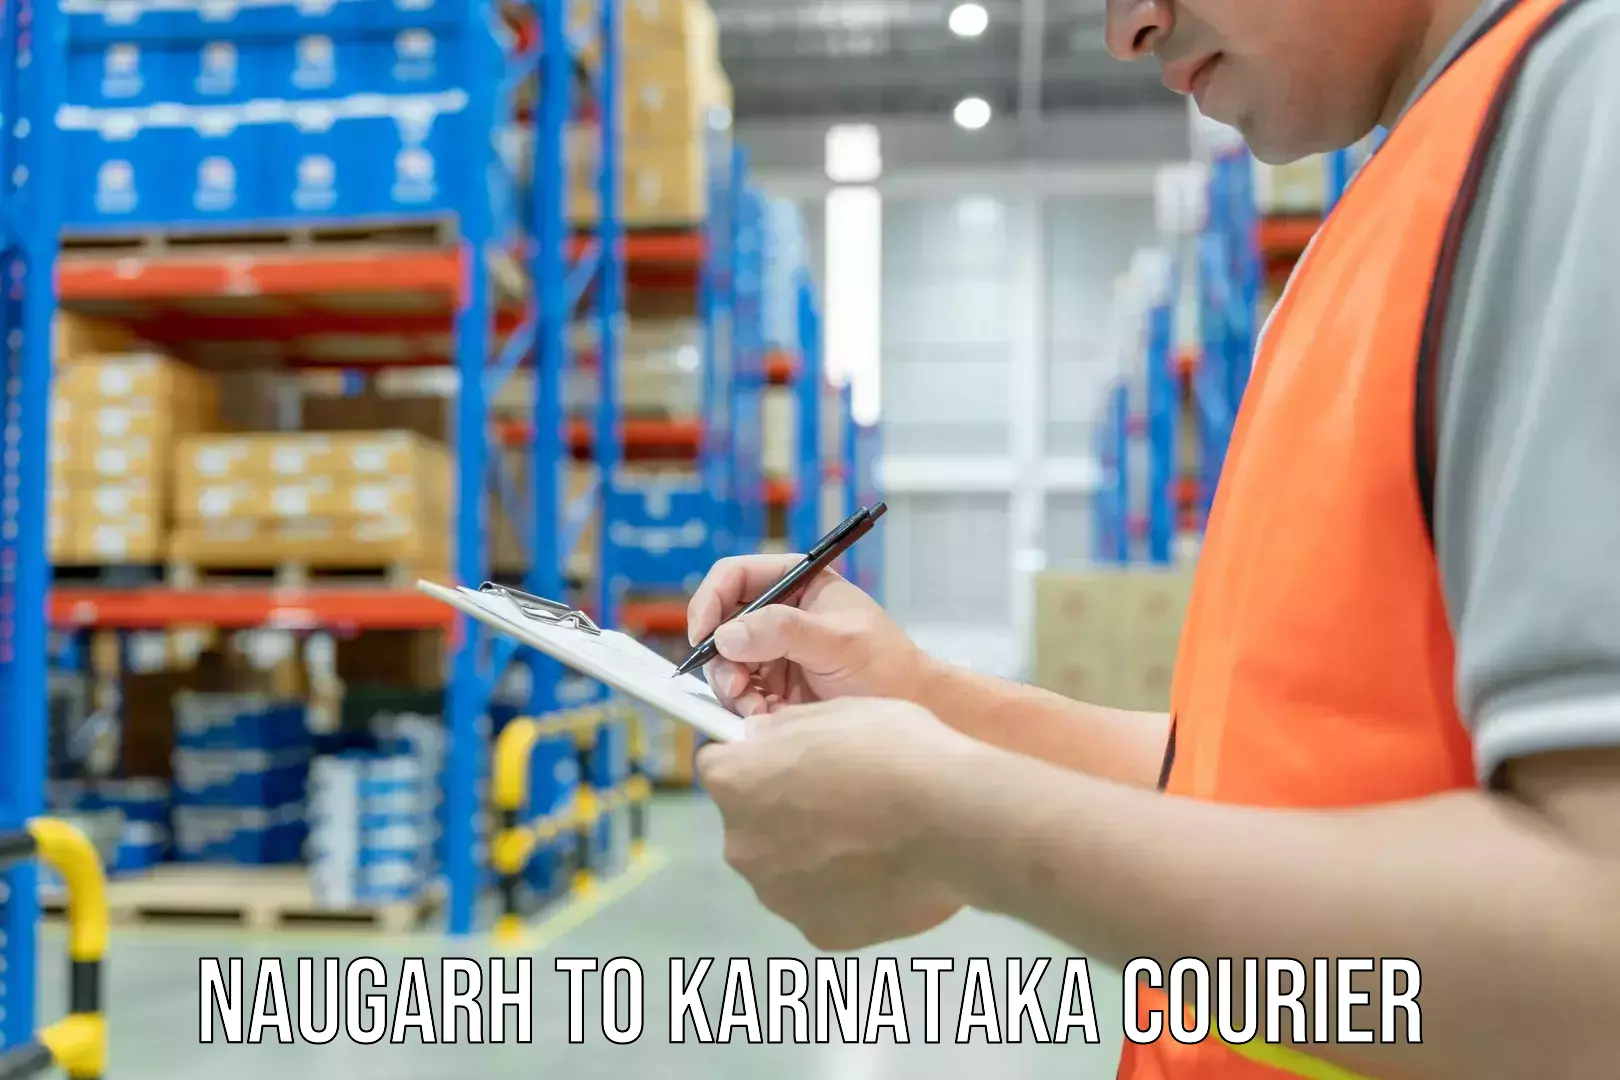 Efficient moving company Naugarh to Karnataka